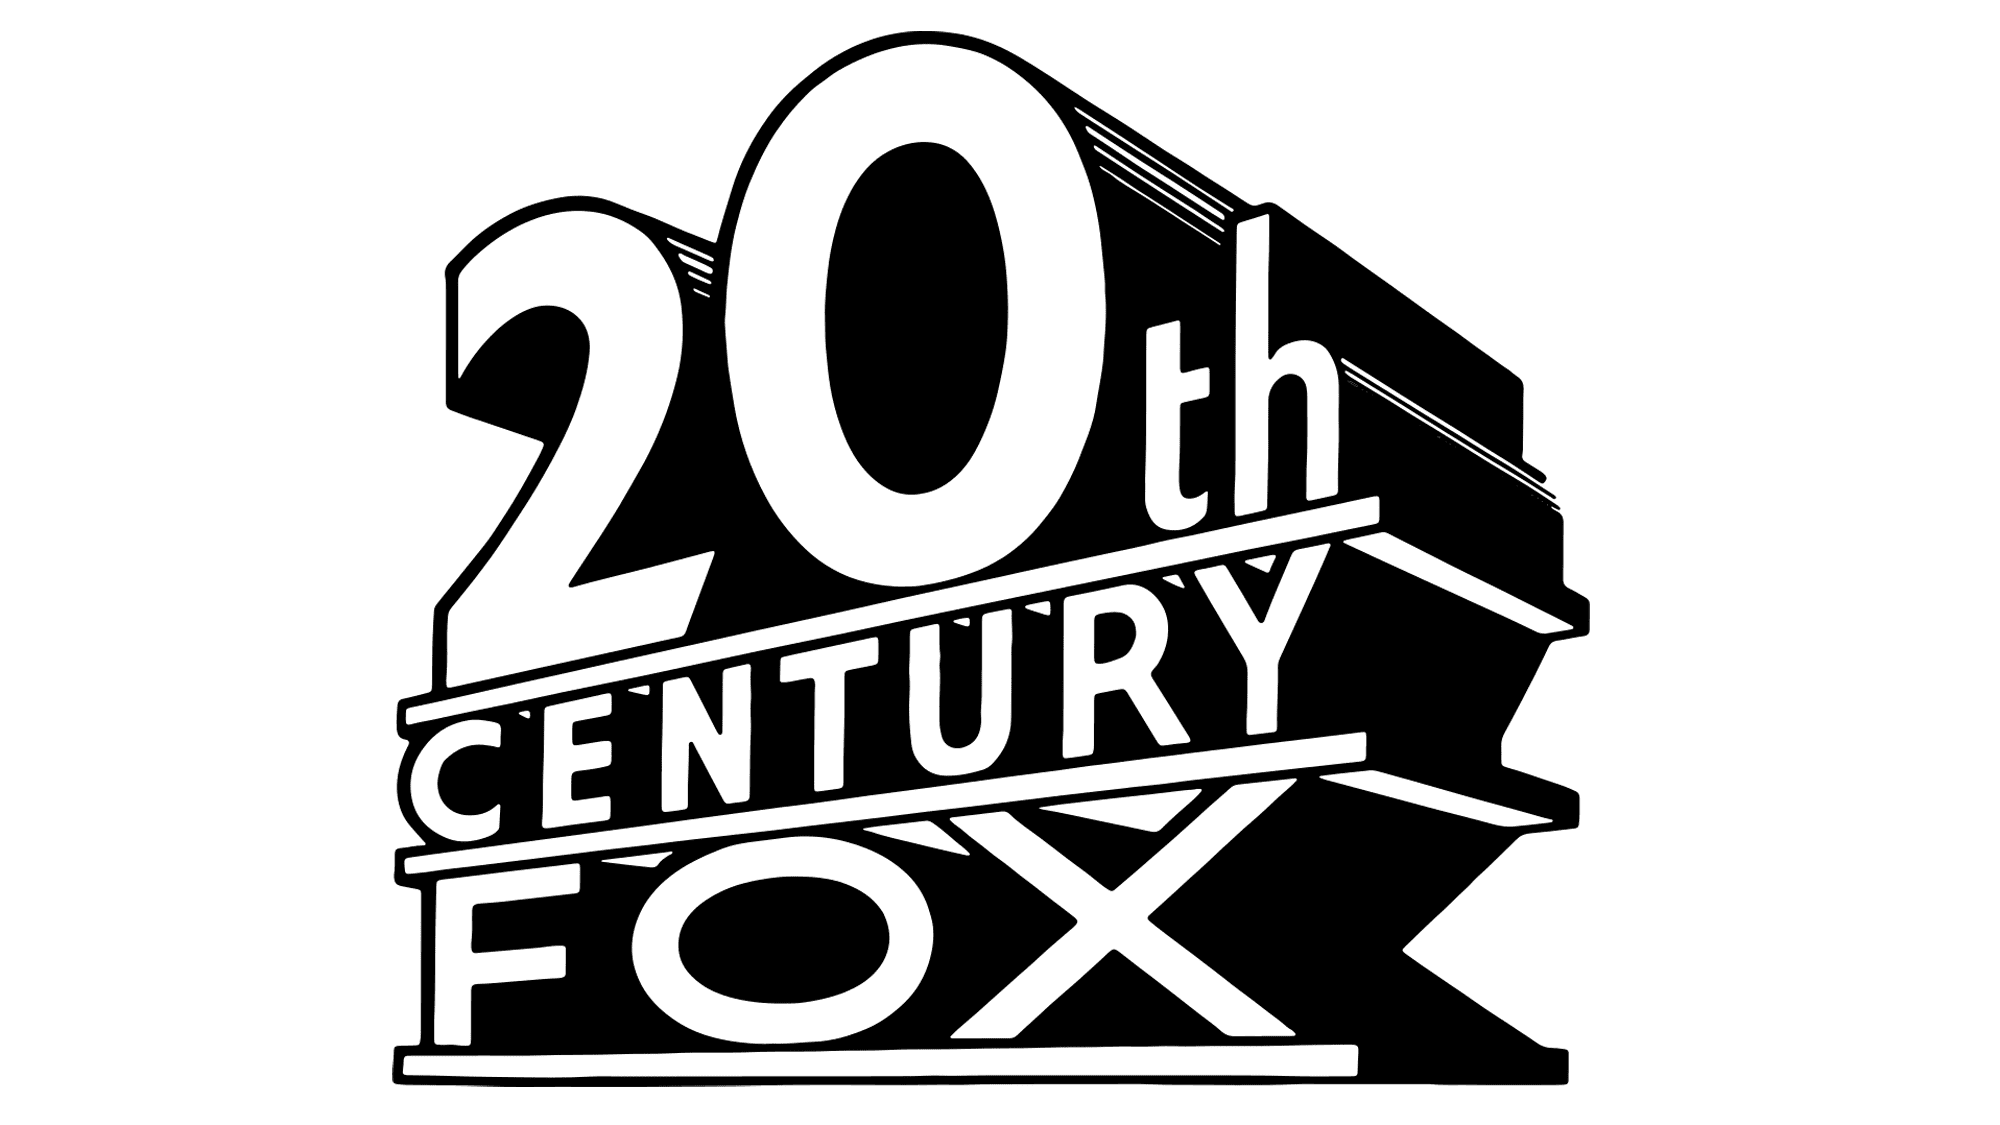 20 Century Fox logo. 20 Век Фокс 1935. 20th Century Fox 1. 20th Century Fox logo 1935.